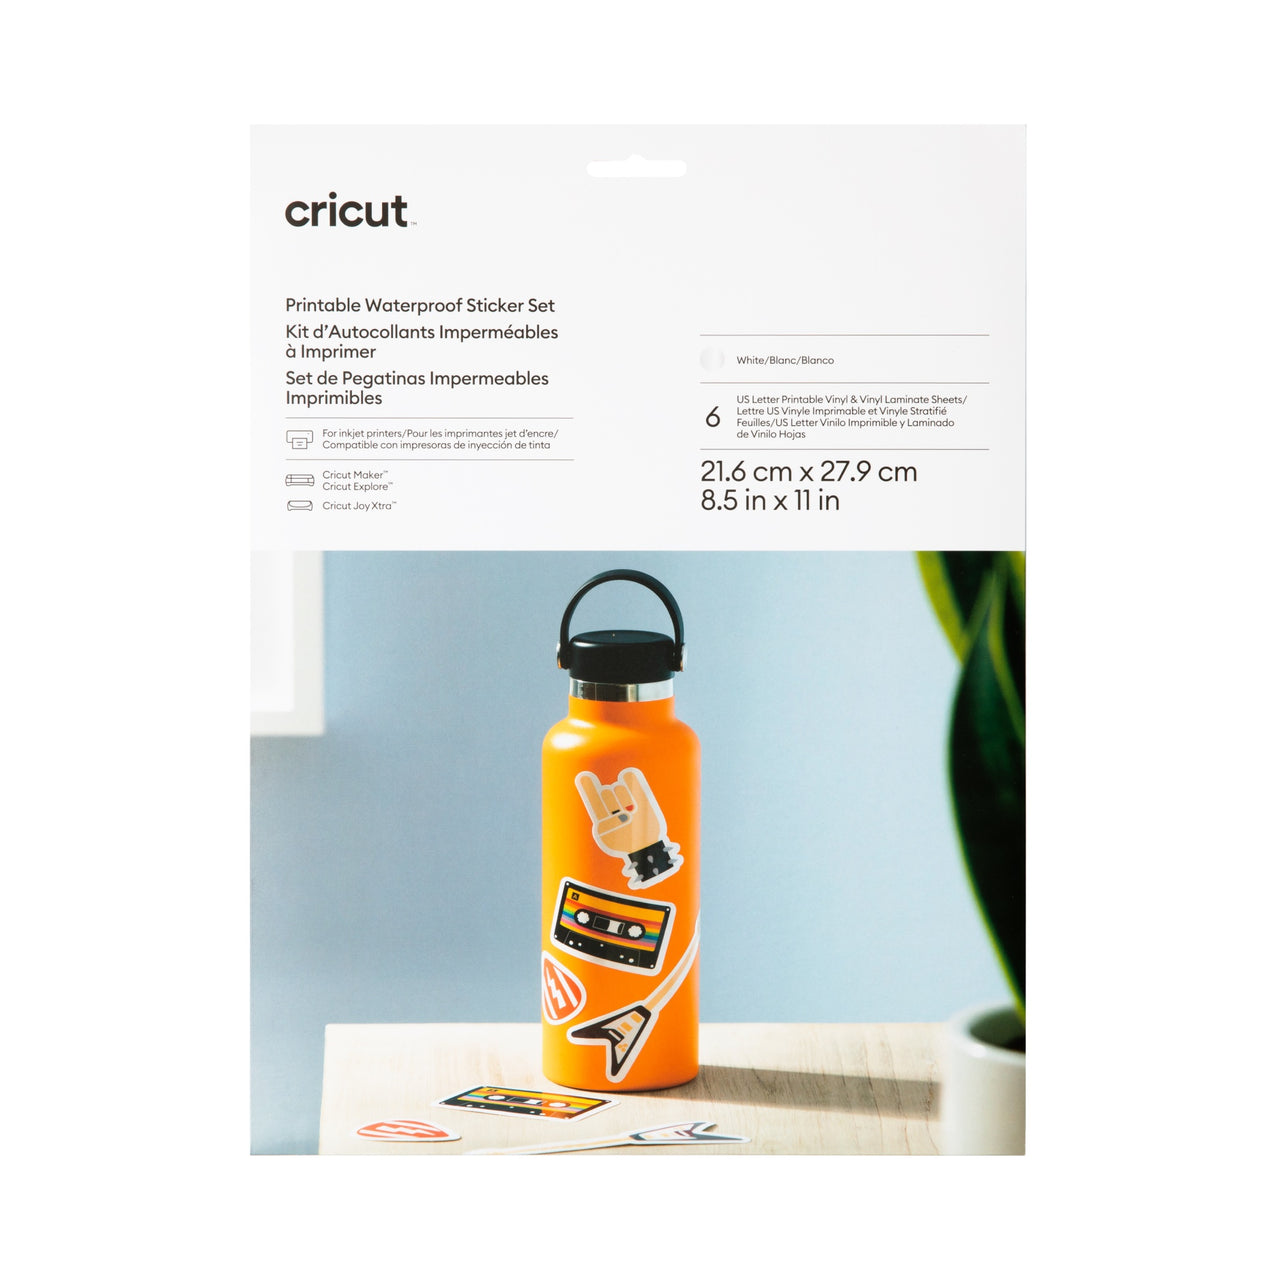 Cricut Joy Xtra Printable Waterproof Sticker Set- White - Damaged Package